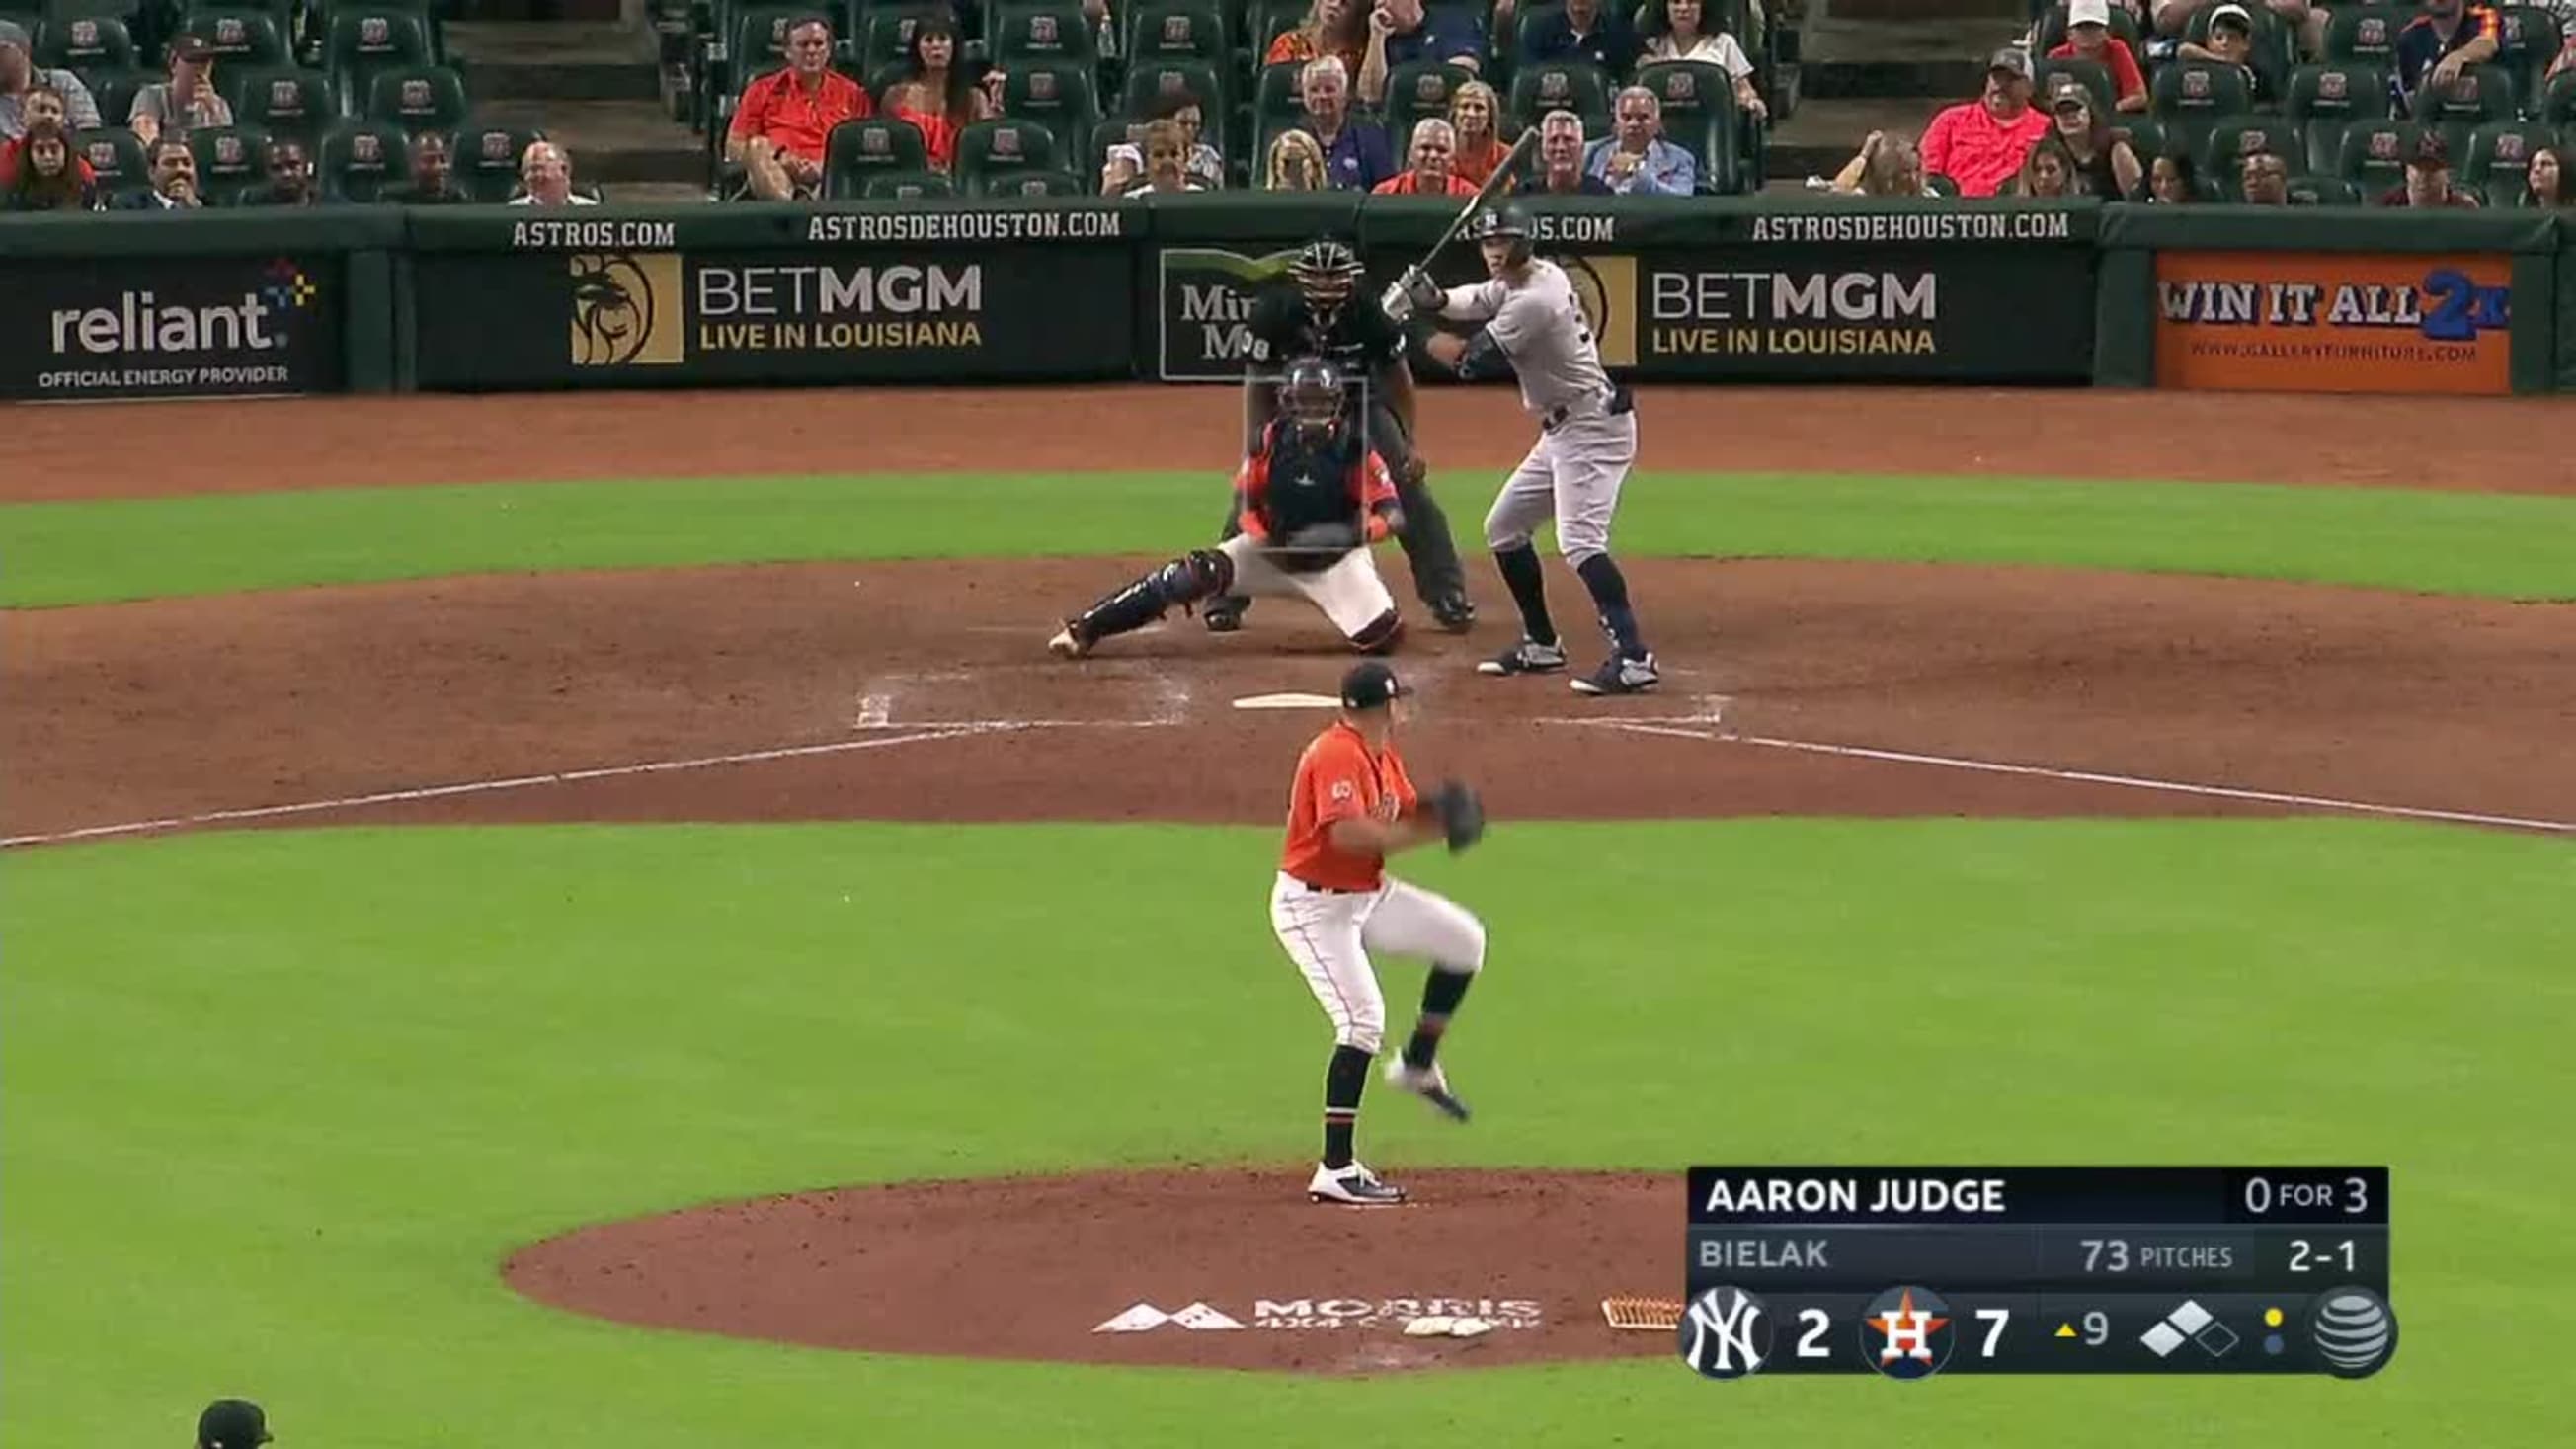 LebronJamesHarden™️ on X: Home runs this season: Aaron Judge: 21